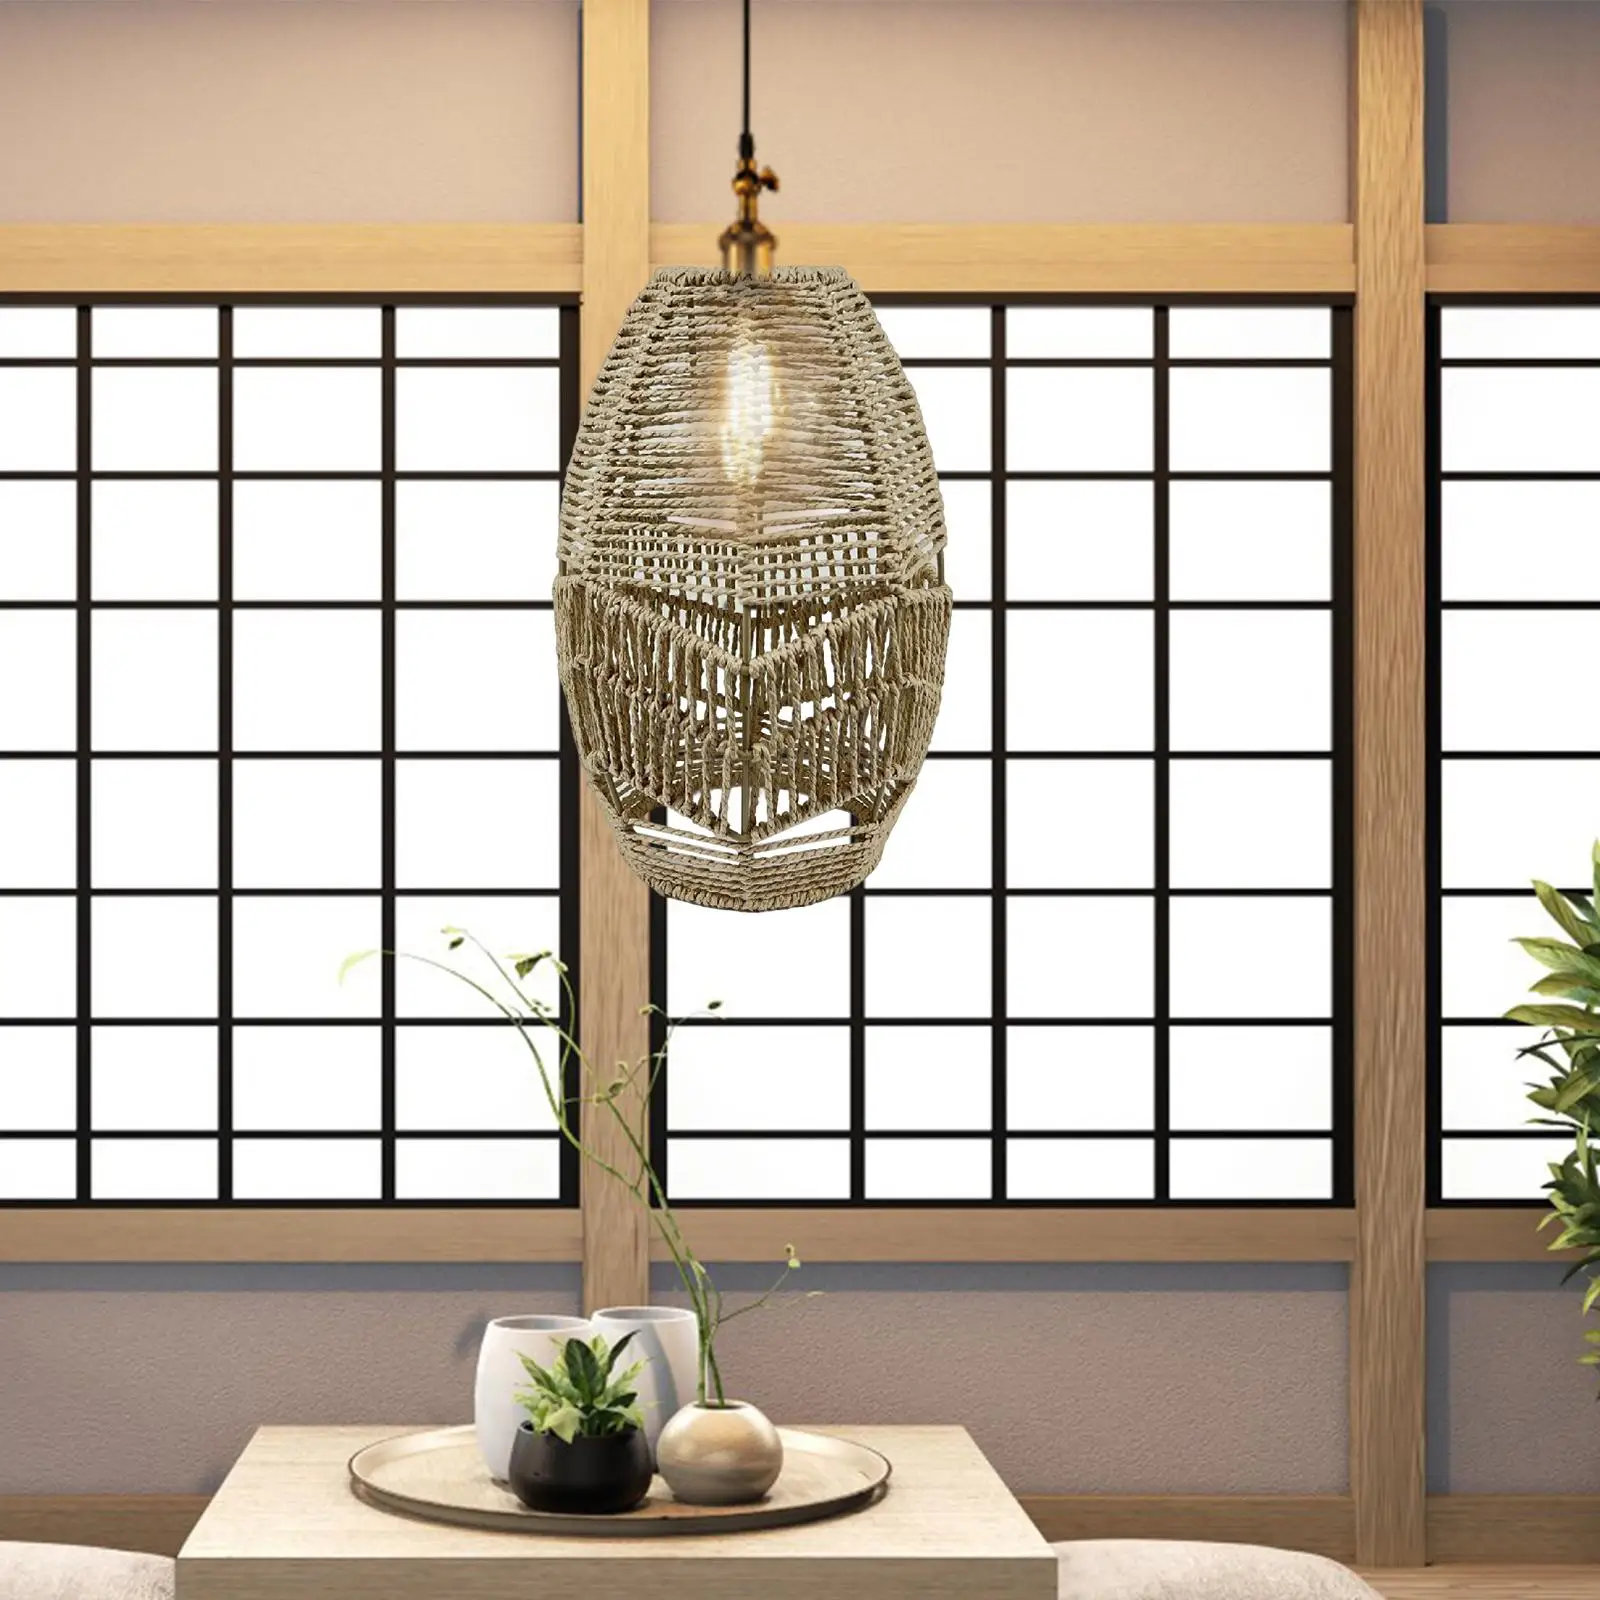 Boho Pendant Lamp Shade Decoration Rattan Handwoven Chandelier Cover for Kitchen Island Dining Room Home Living Room Restaurant